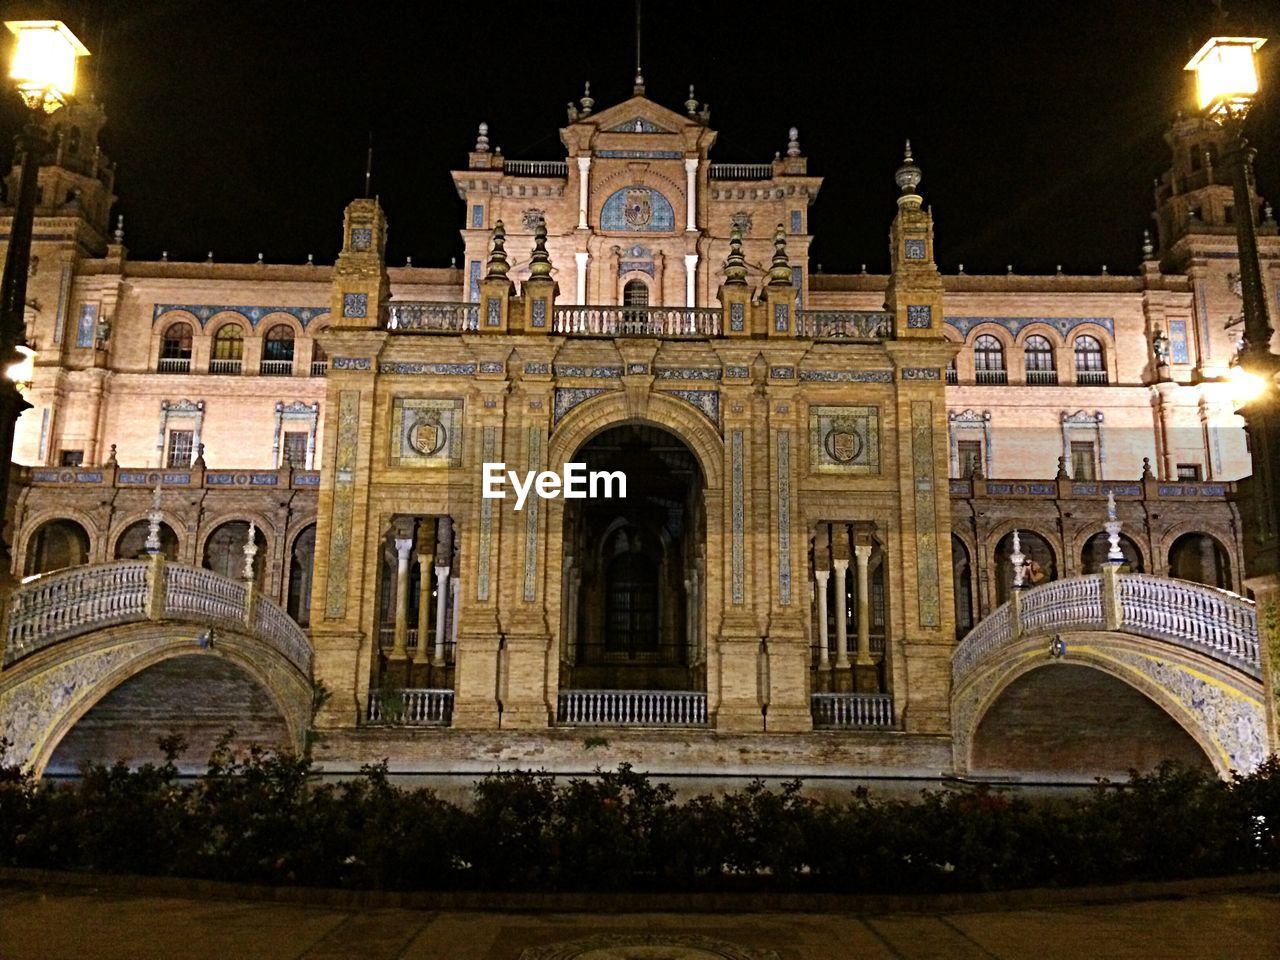 Entrance to palace at night